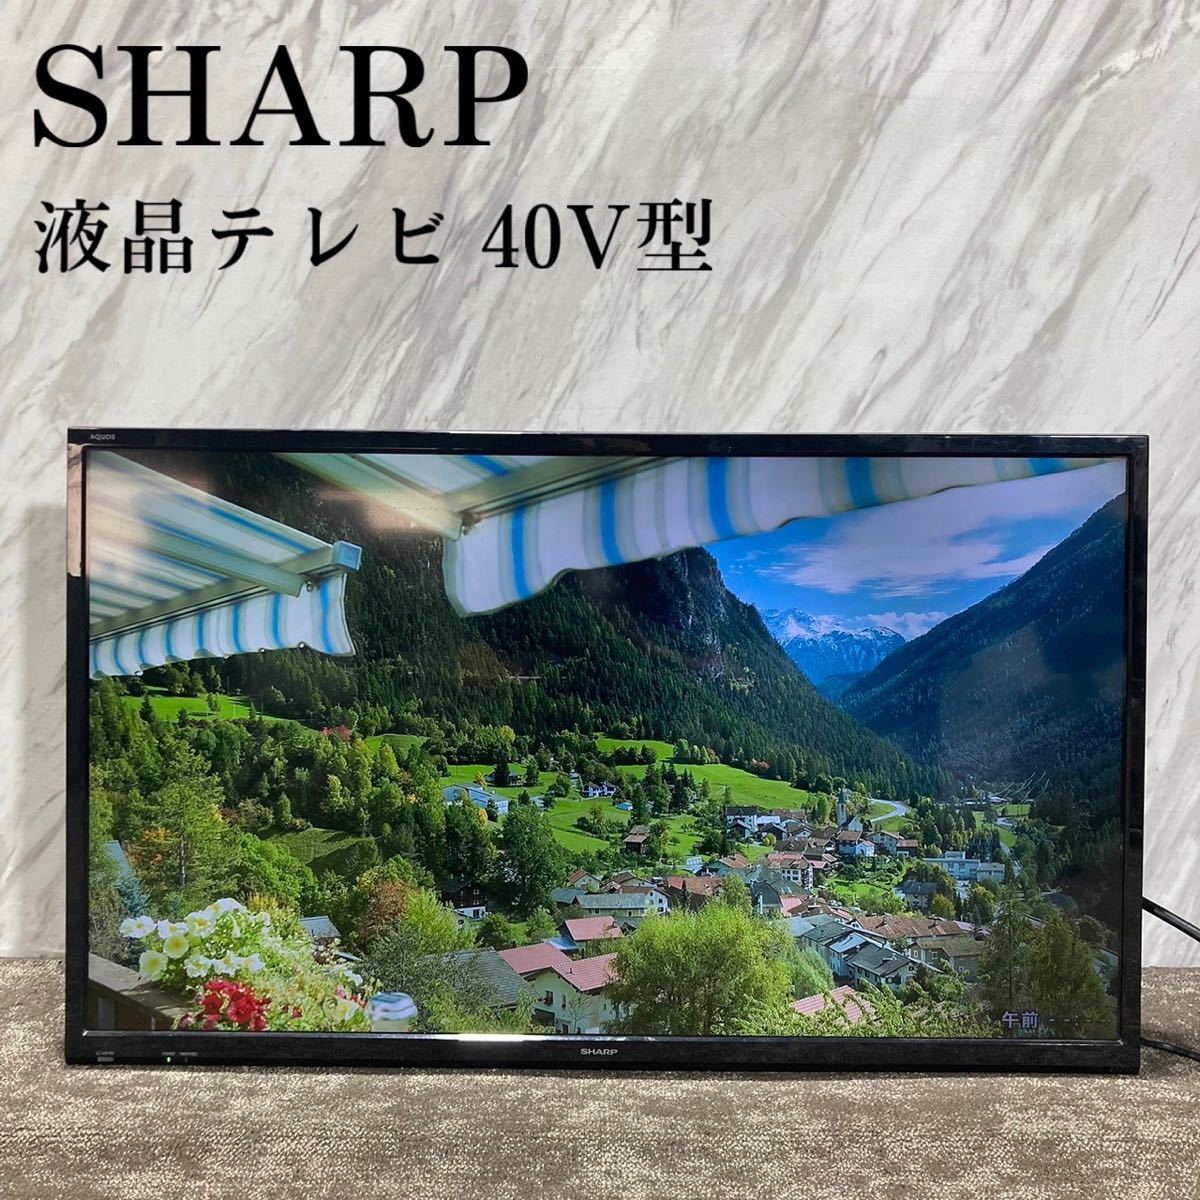 SHARP 液晶テレビ LC-40H30 40V型 AQUOS 家電 J689-